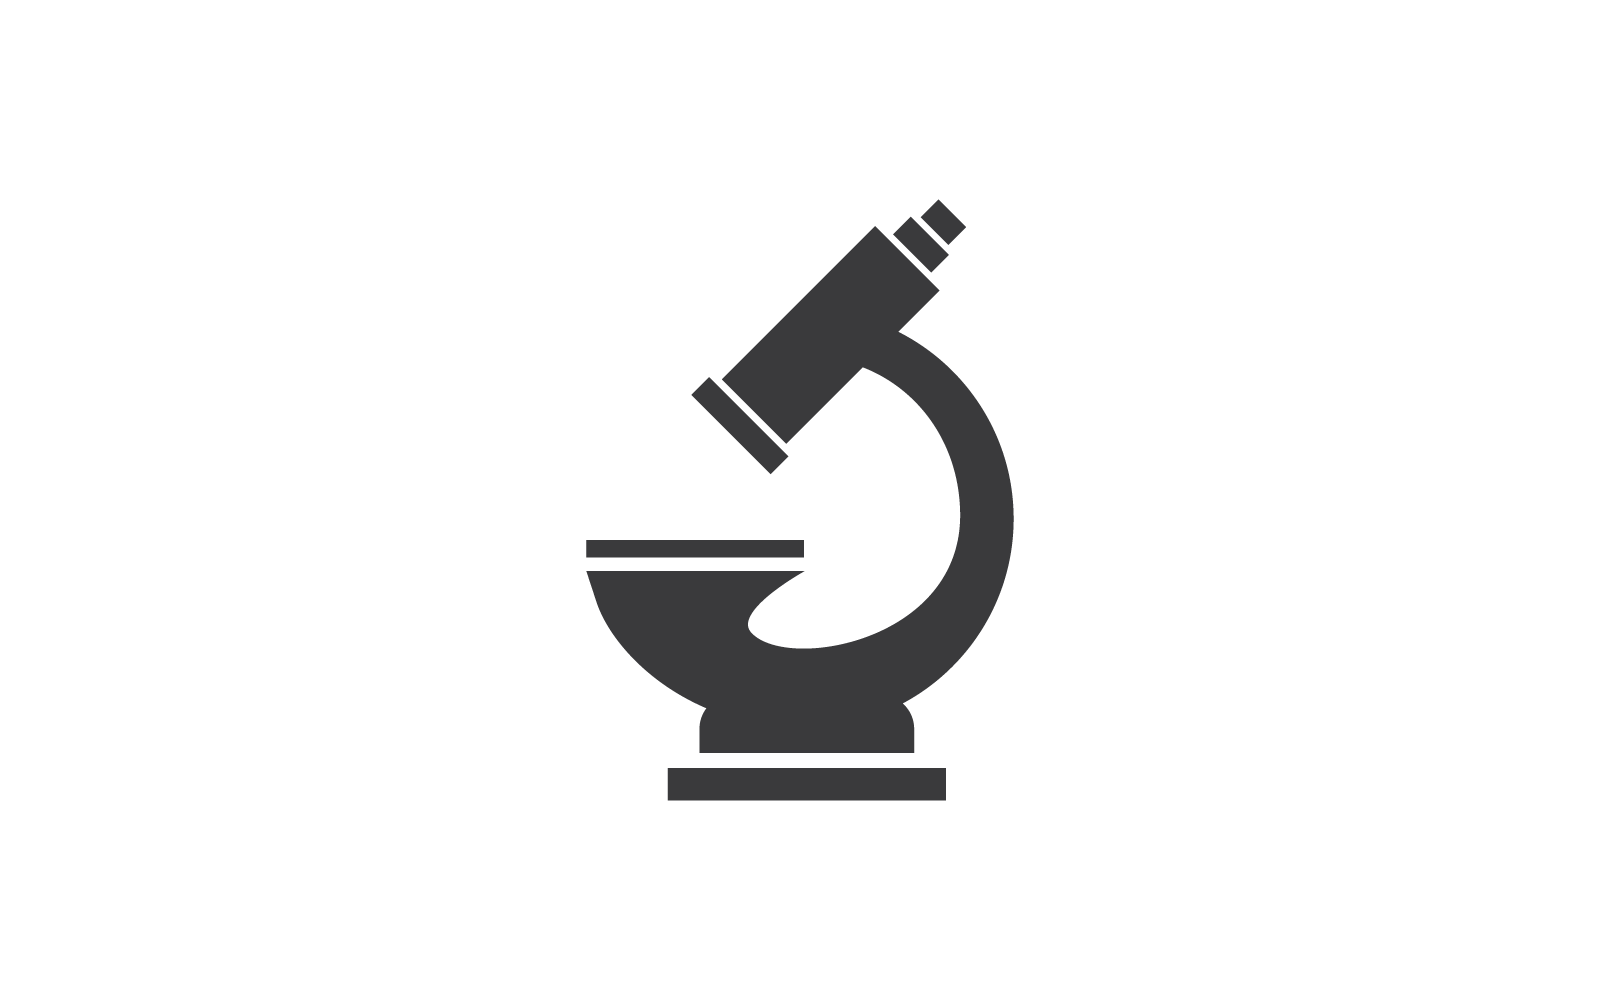 Mikroskop-Logo-Symbol, Vektorgrafik, flaches Design